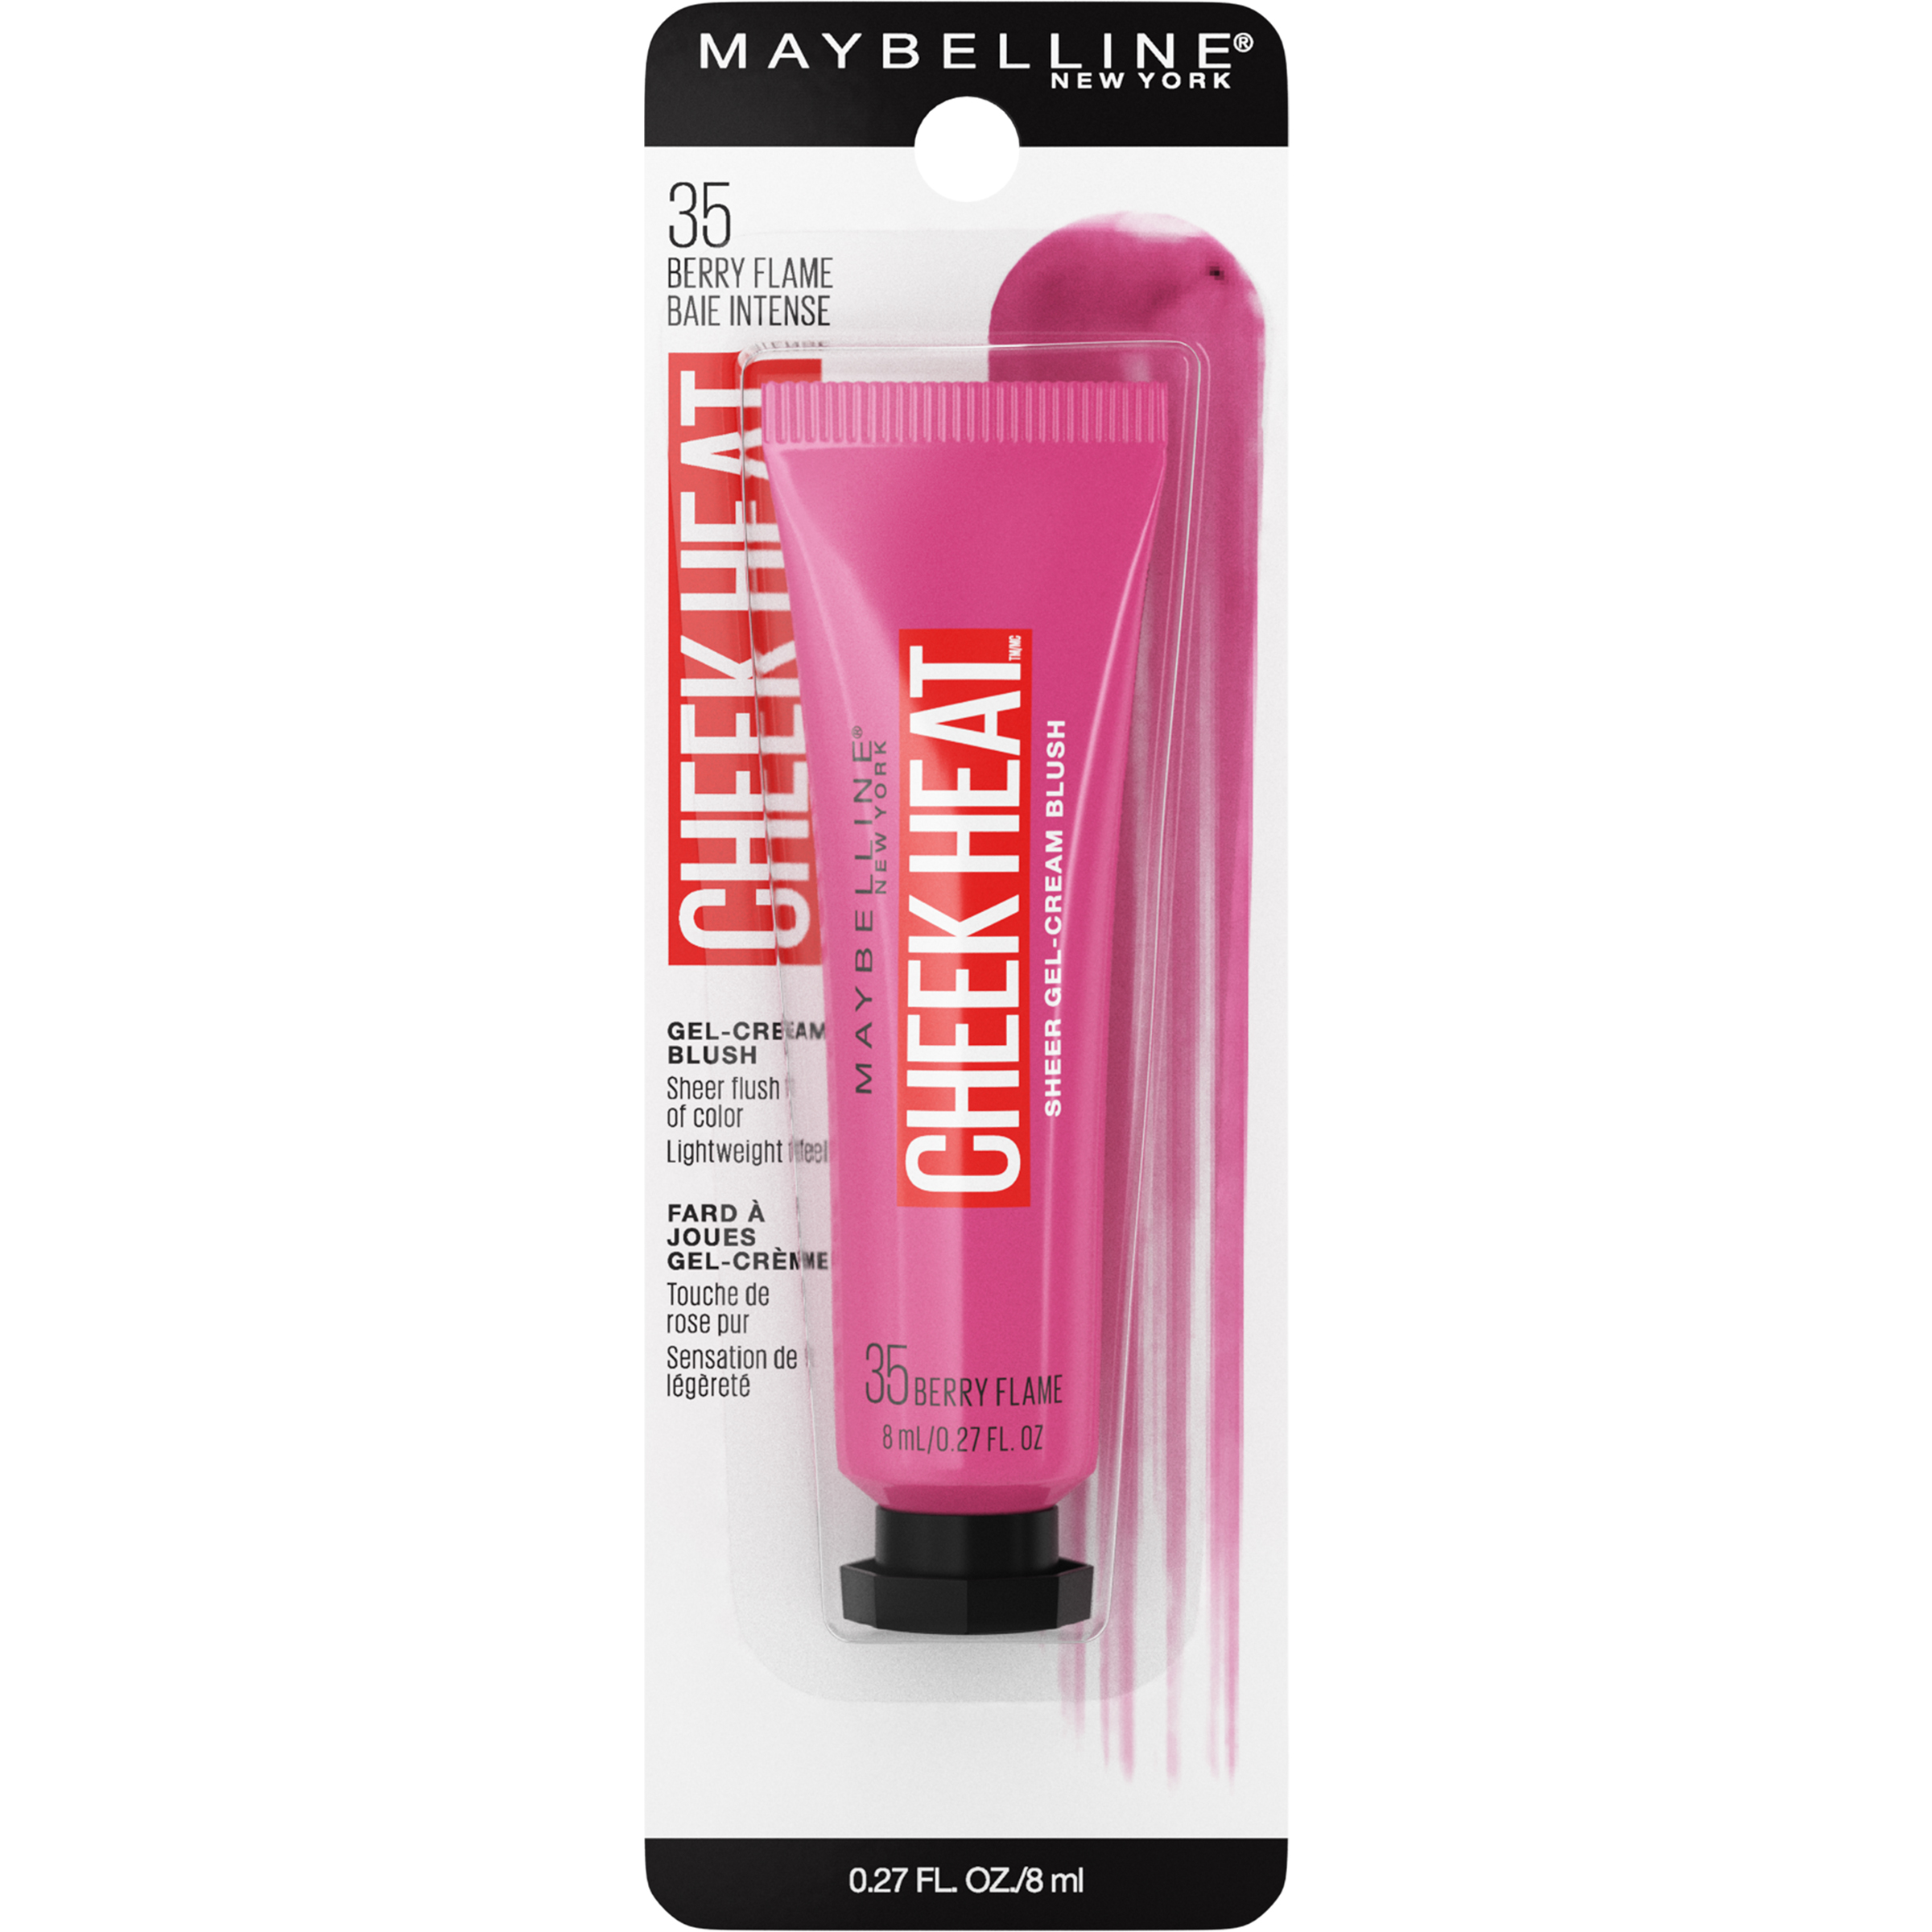 Maybelline Cheek Heat Gel-Cream Blush, Face Makeup, Berry Flame, 0.27 fl oz - image 3 of 12